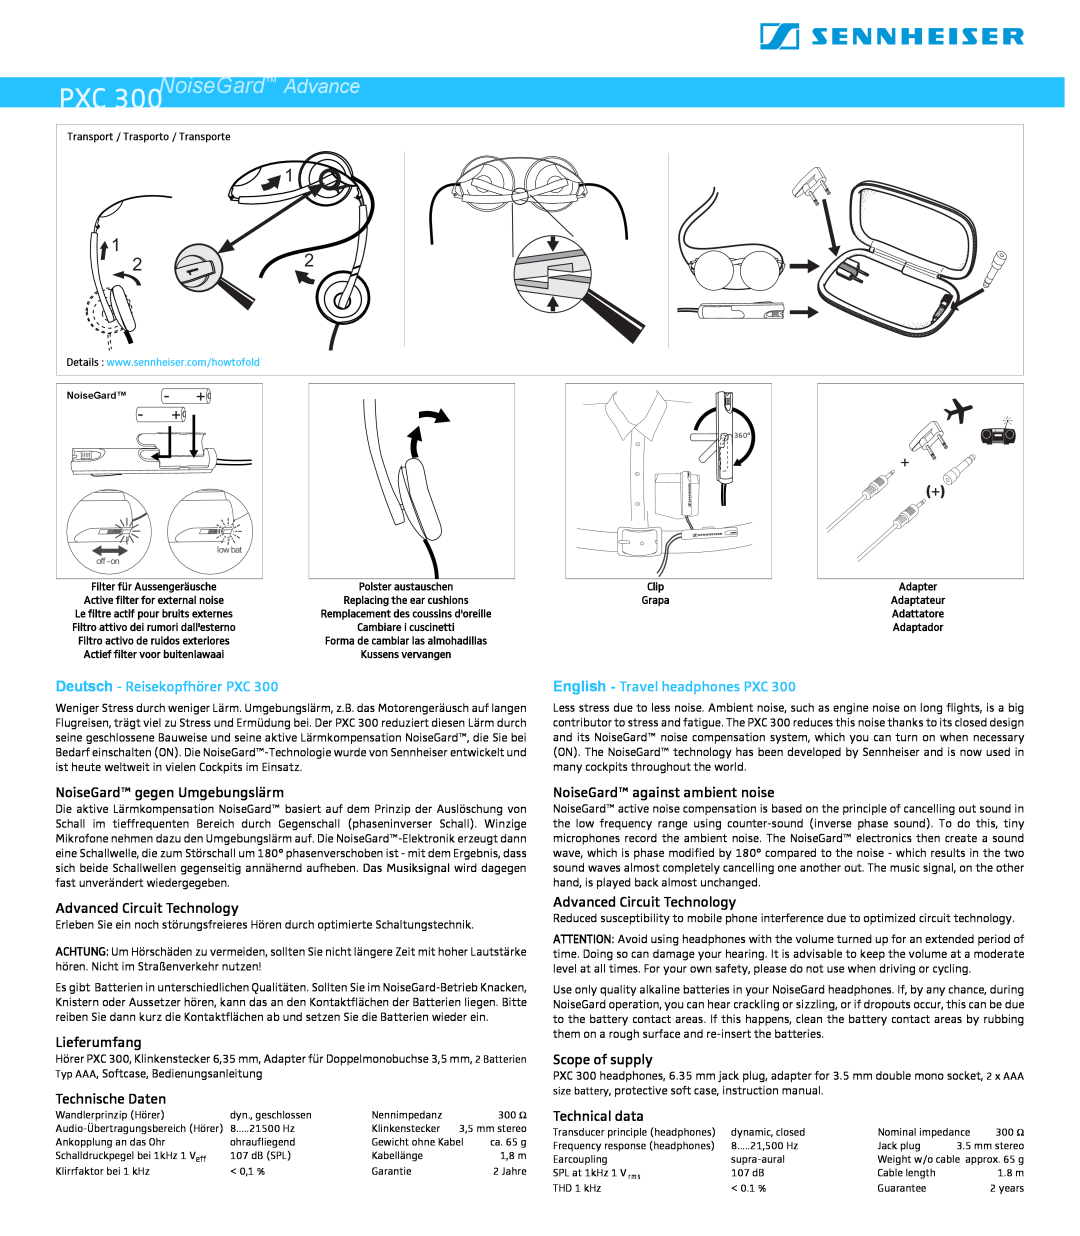 Sennheiser instruction manual PXC 300NoiseGard Advance, Deutsch - Reisekopfhörer PXC, English - Travel headphones PXC 